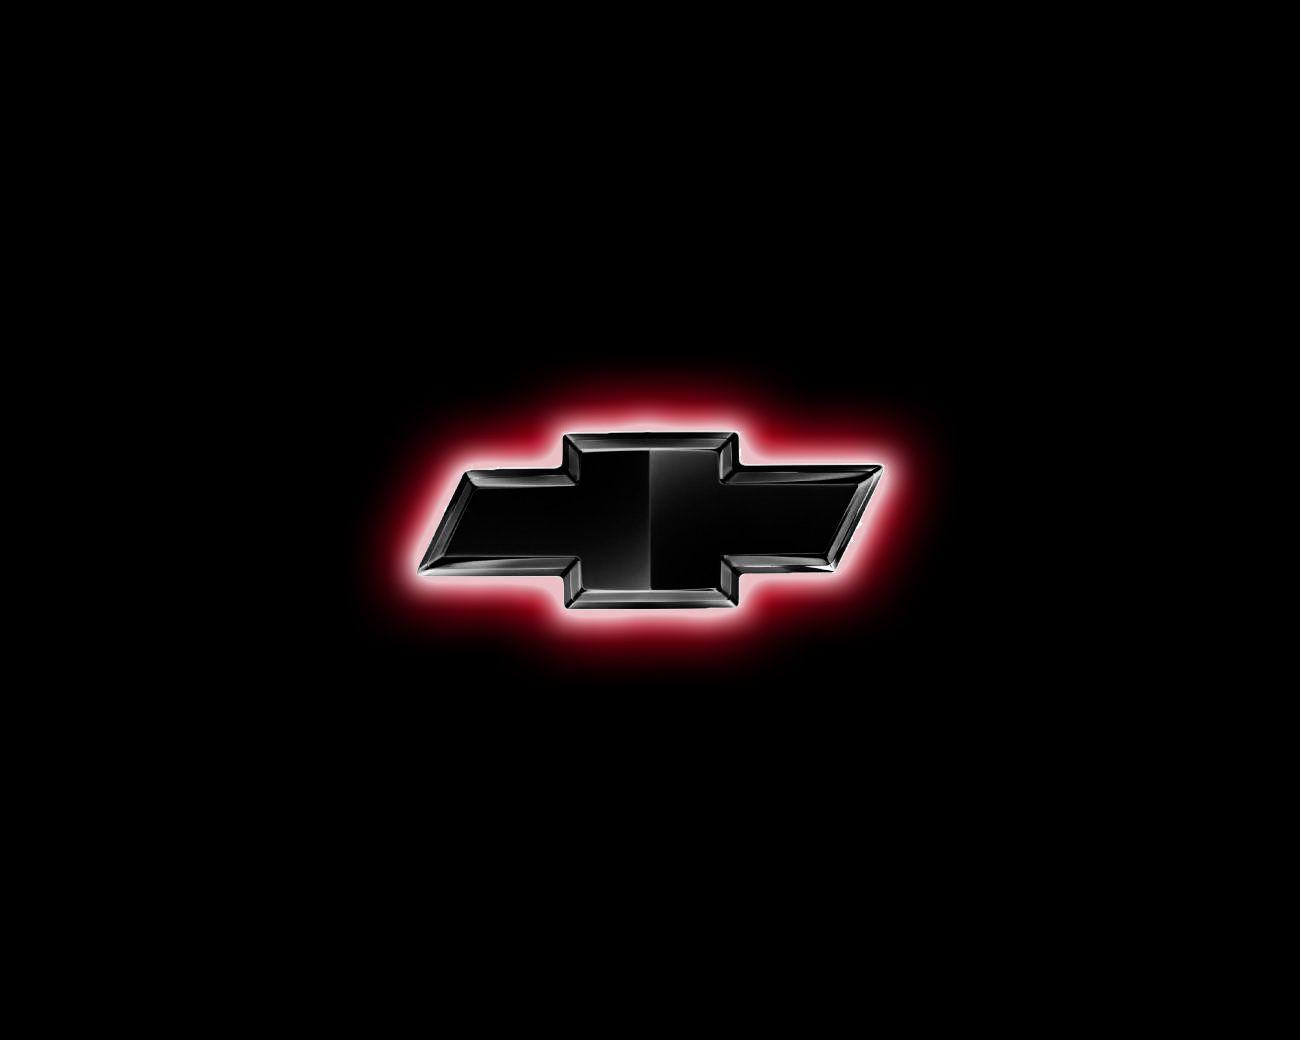 Red Chevy Logo - Chevy Logo Request. (Pics Inside) - Camaro5 Chevy Camaro Forum ...